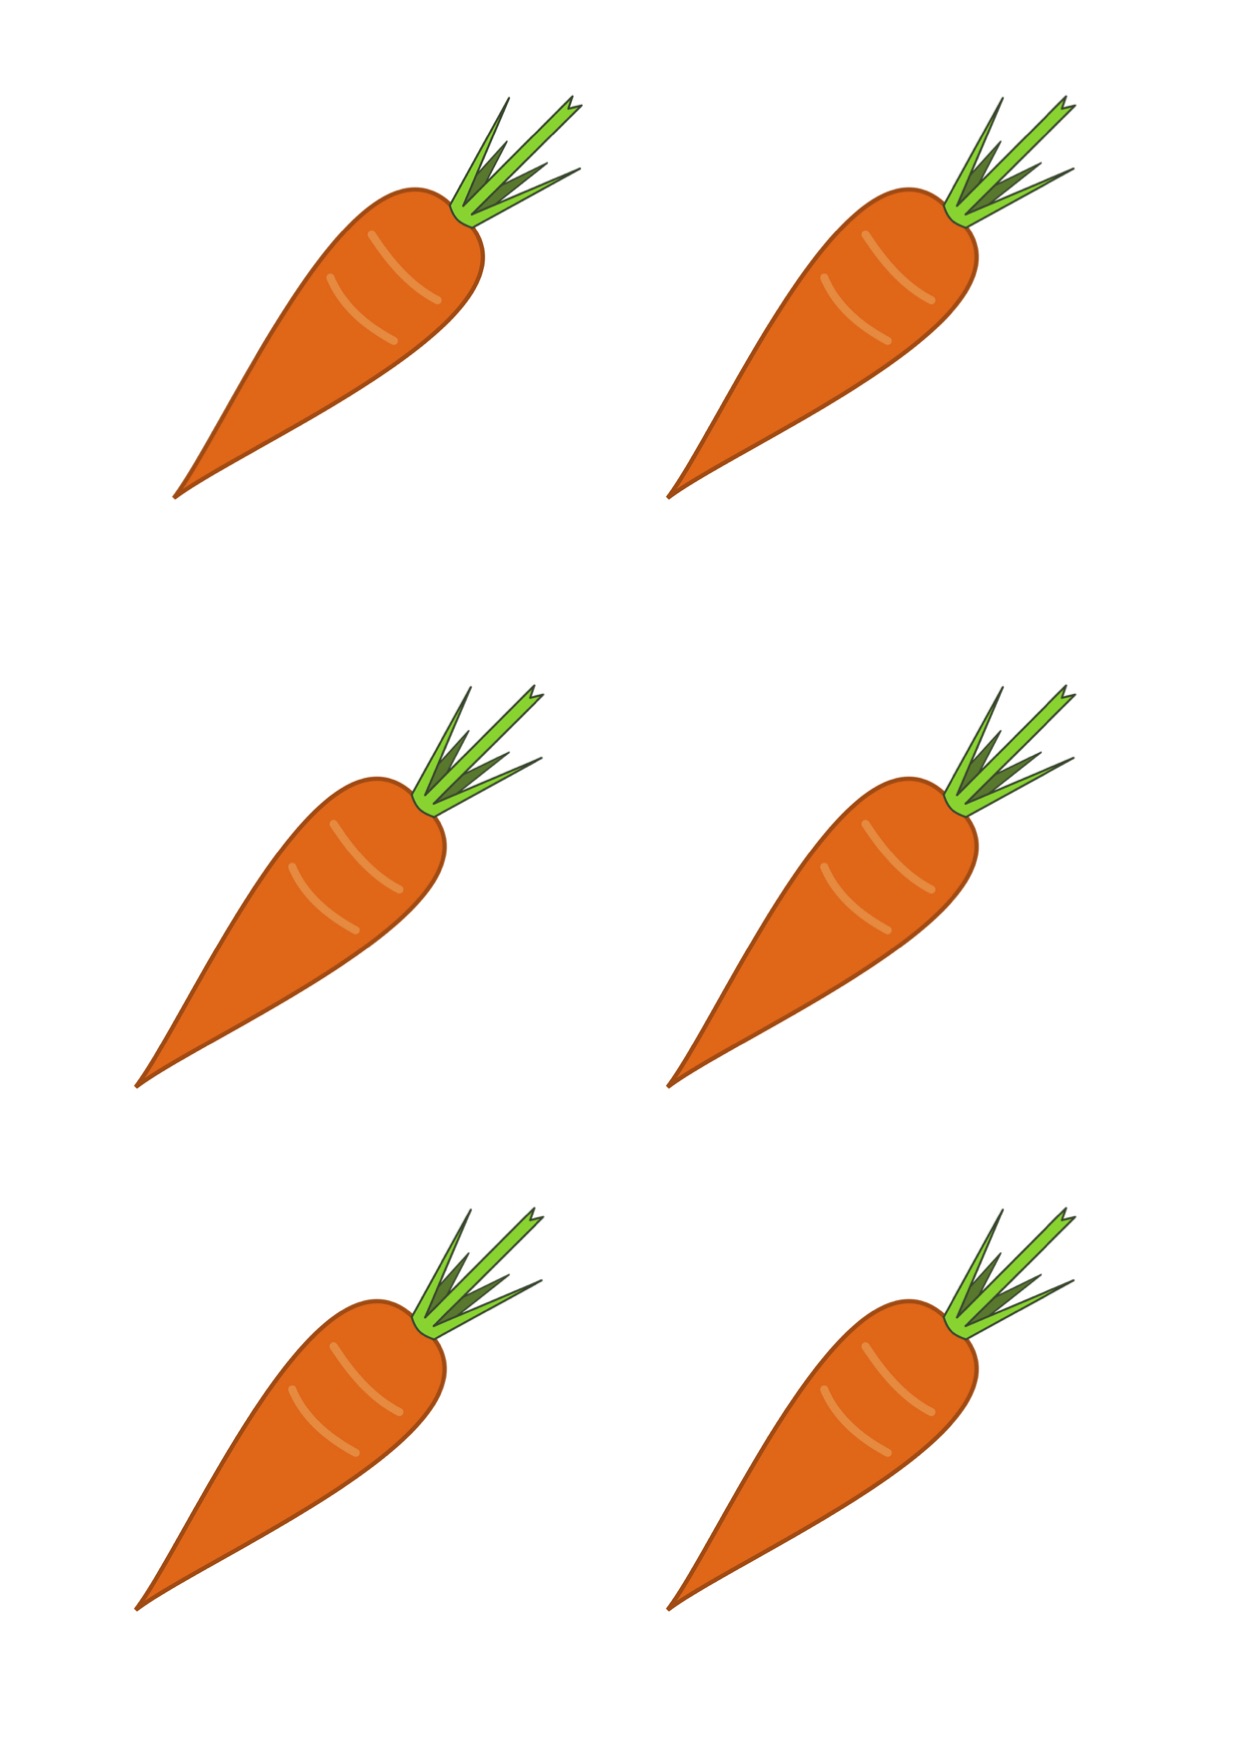 Karotten, Möhren